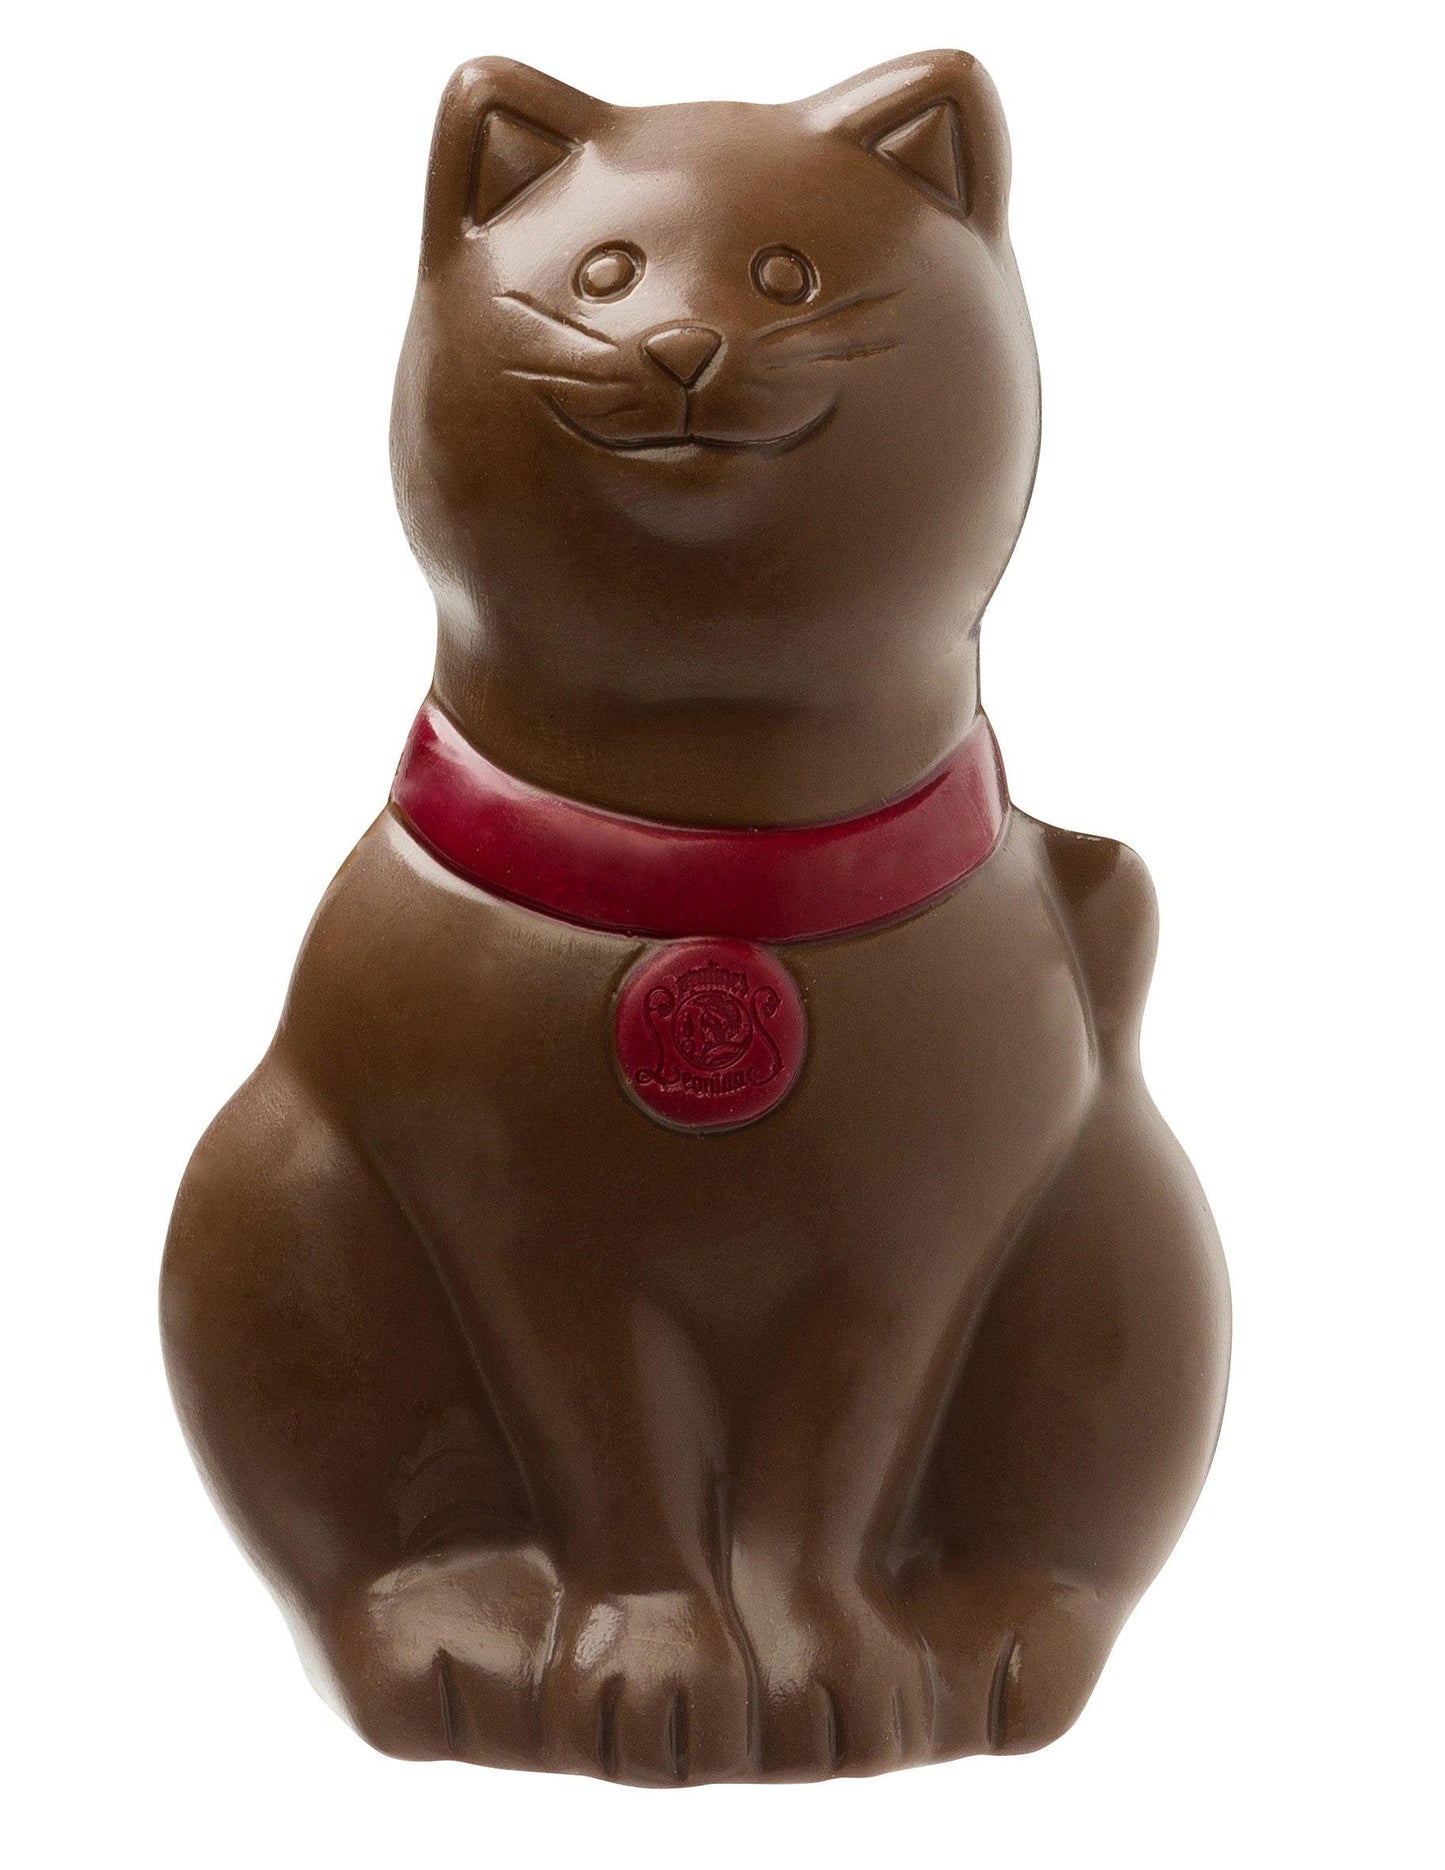 cat-chocolate-figure-50g-with-4-christmas-chocolate-balls-leonidas-brighton-3_1445x.jpg